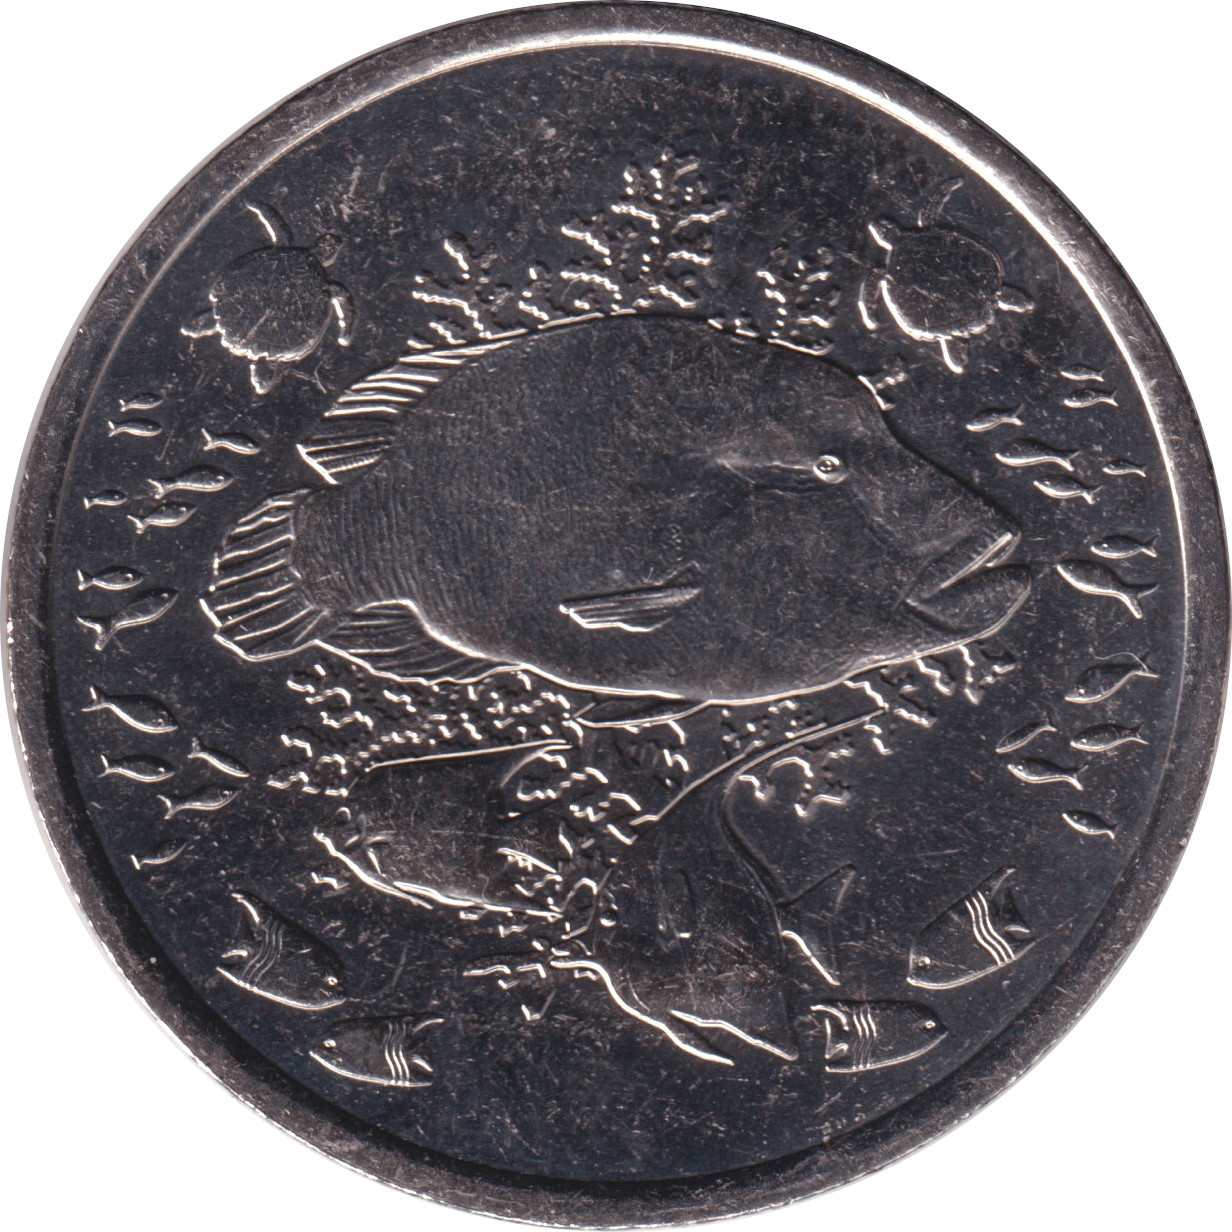 20 francs - Poisson